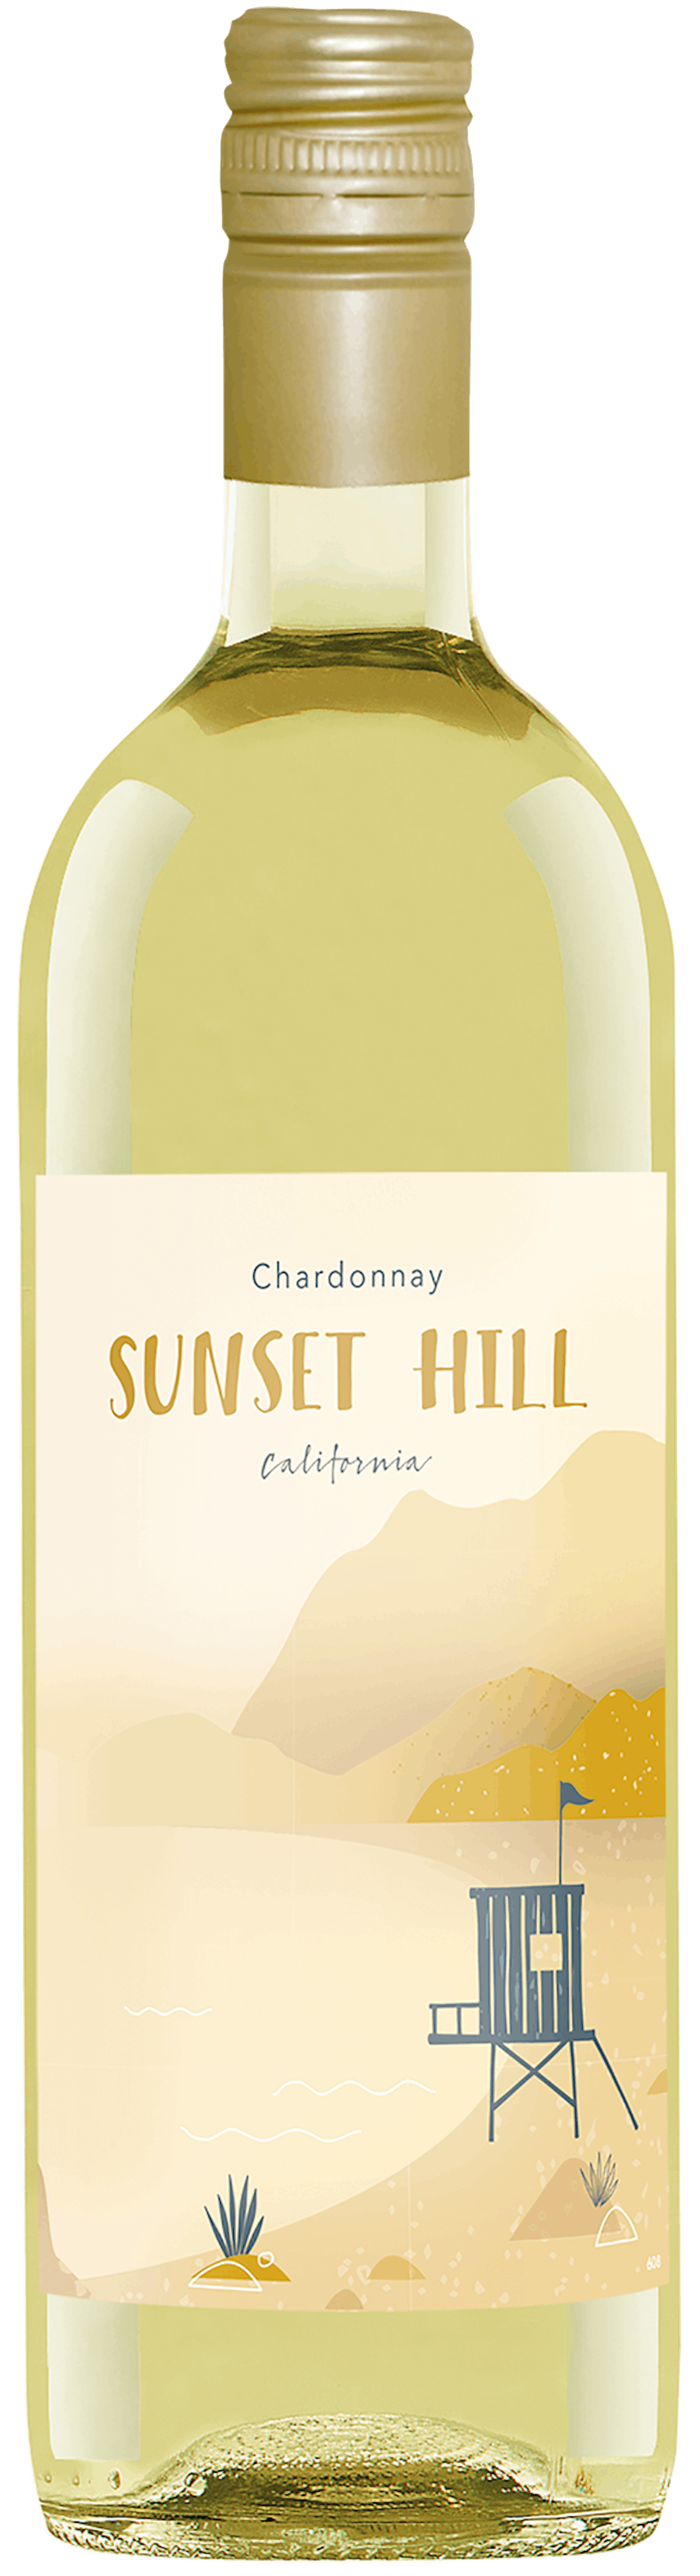 Sunset Hill Chardonnay